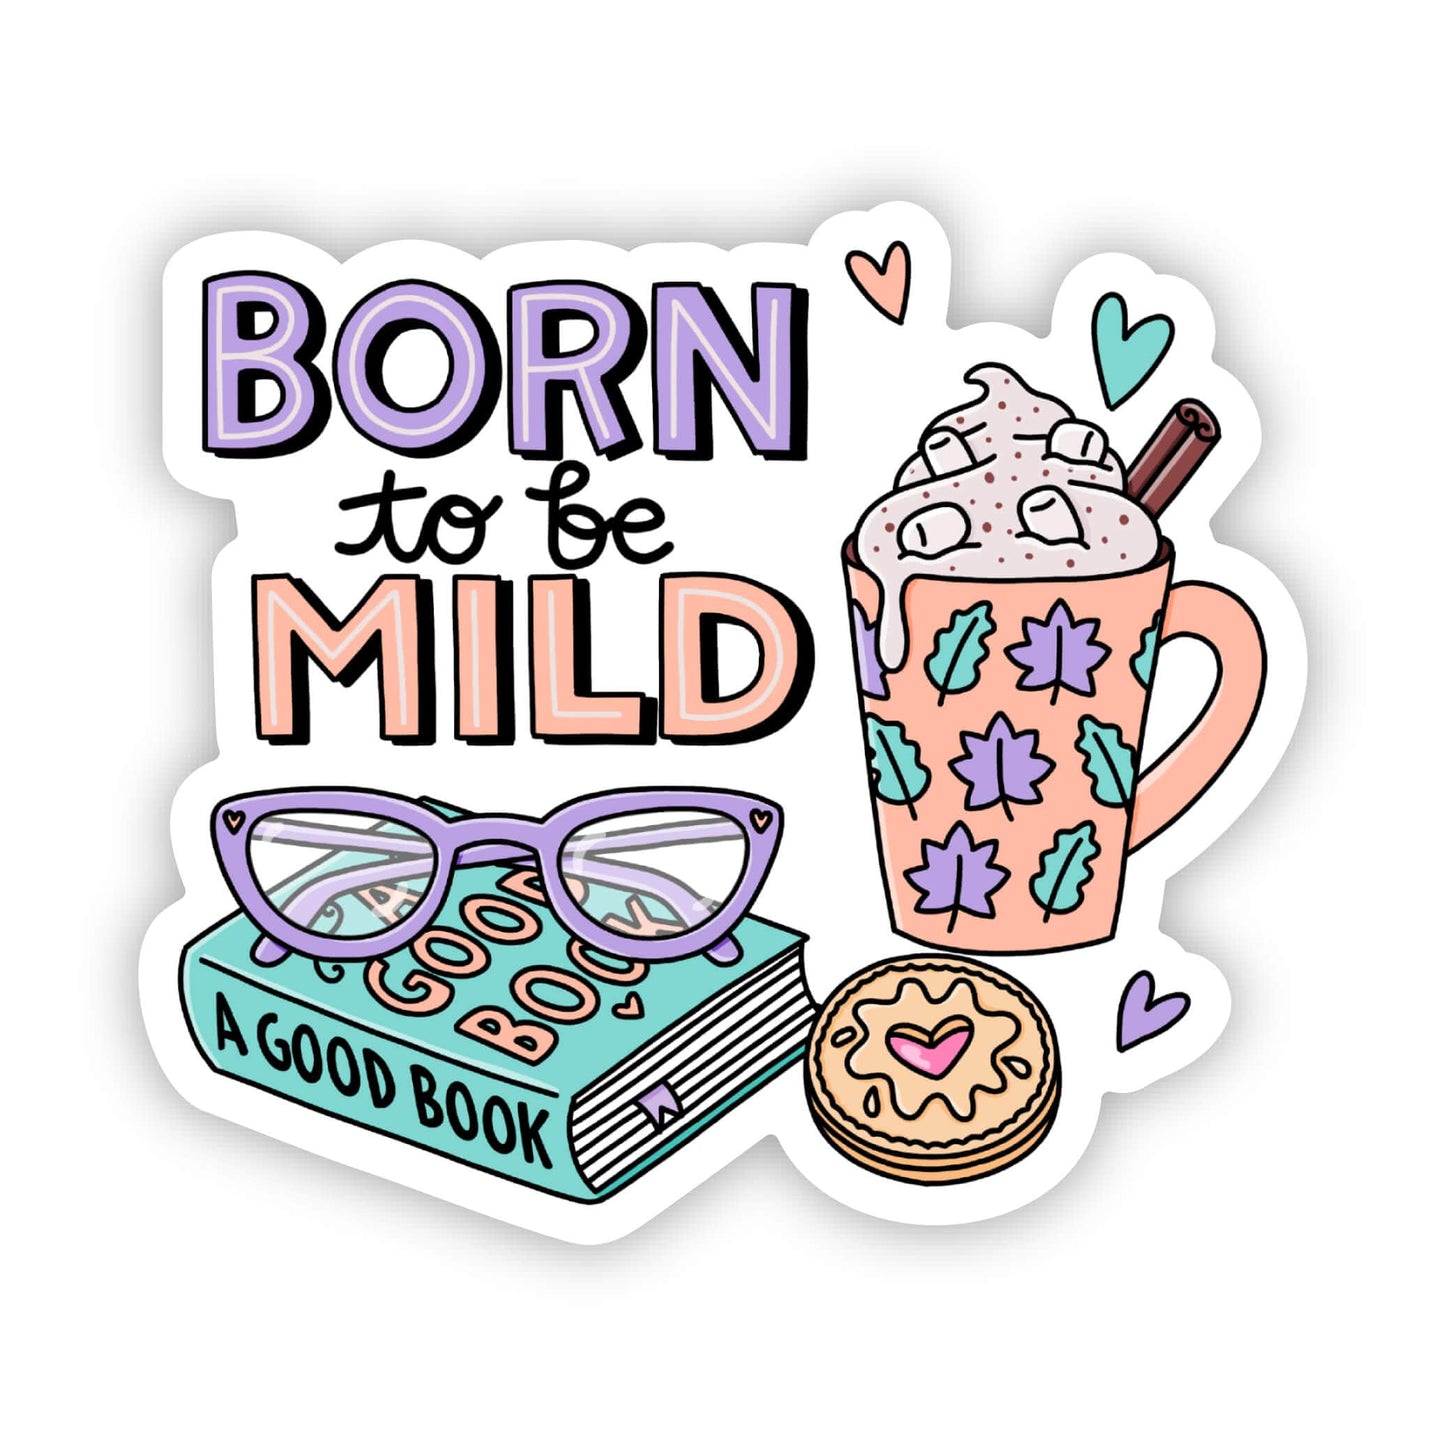 "Born to be mild" cafe sticker